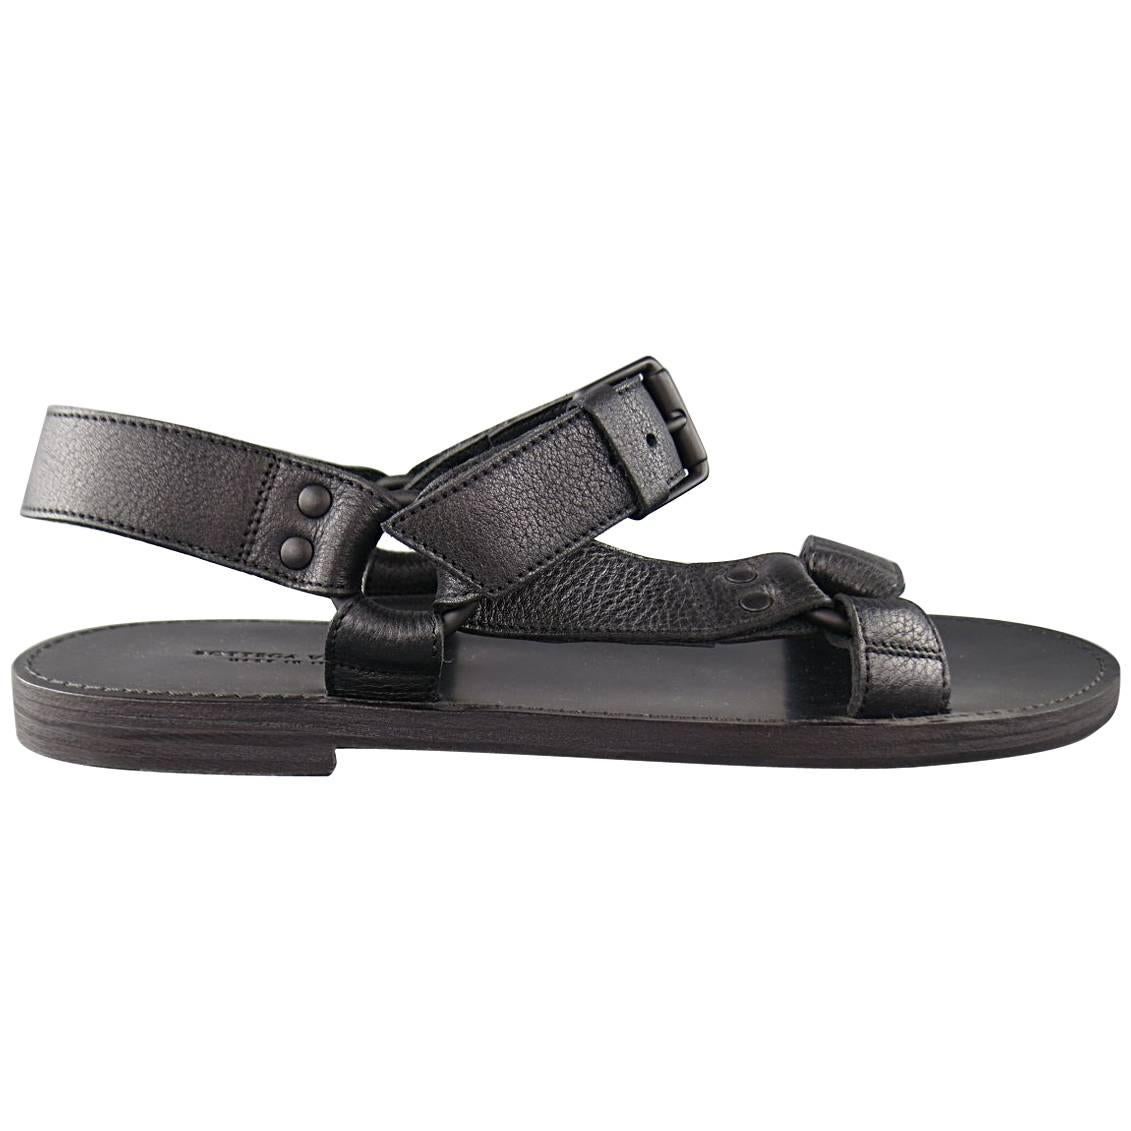 Men's BOTTEGA VENETA Size 9 Black Textured Leather Ankle Strap Sandals